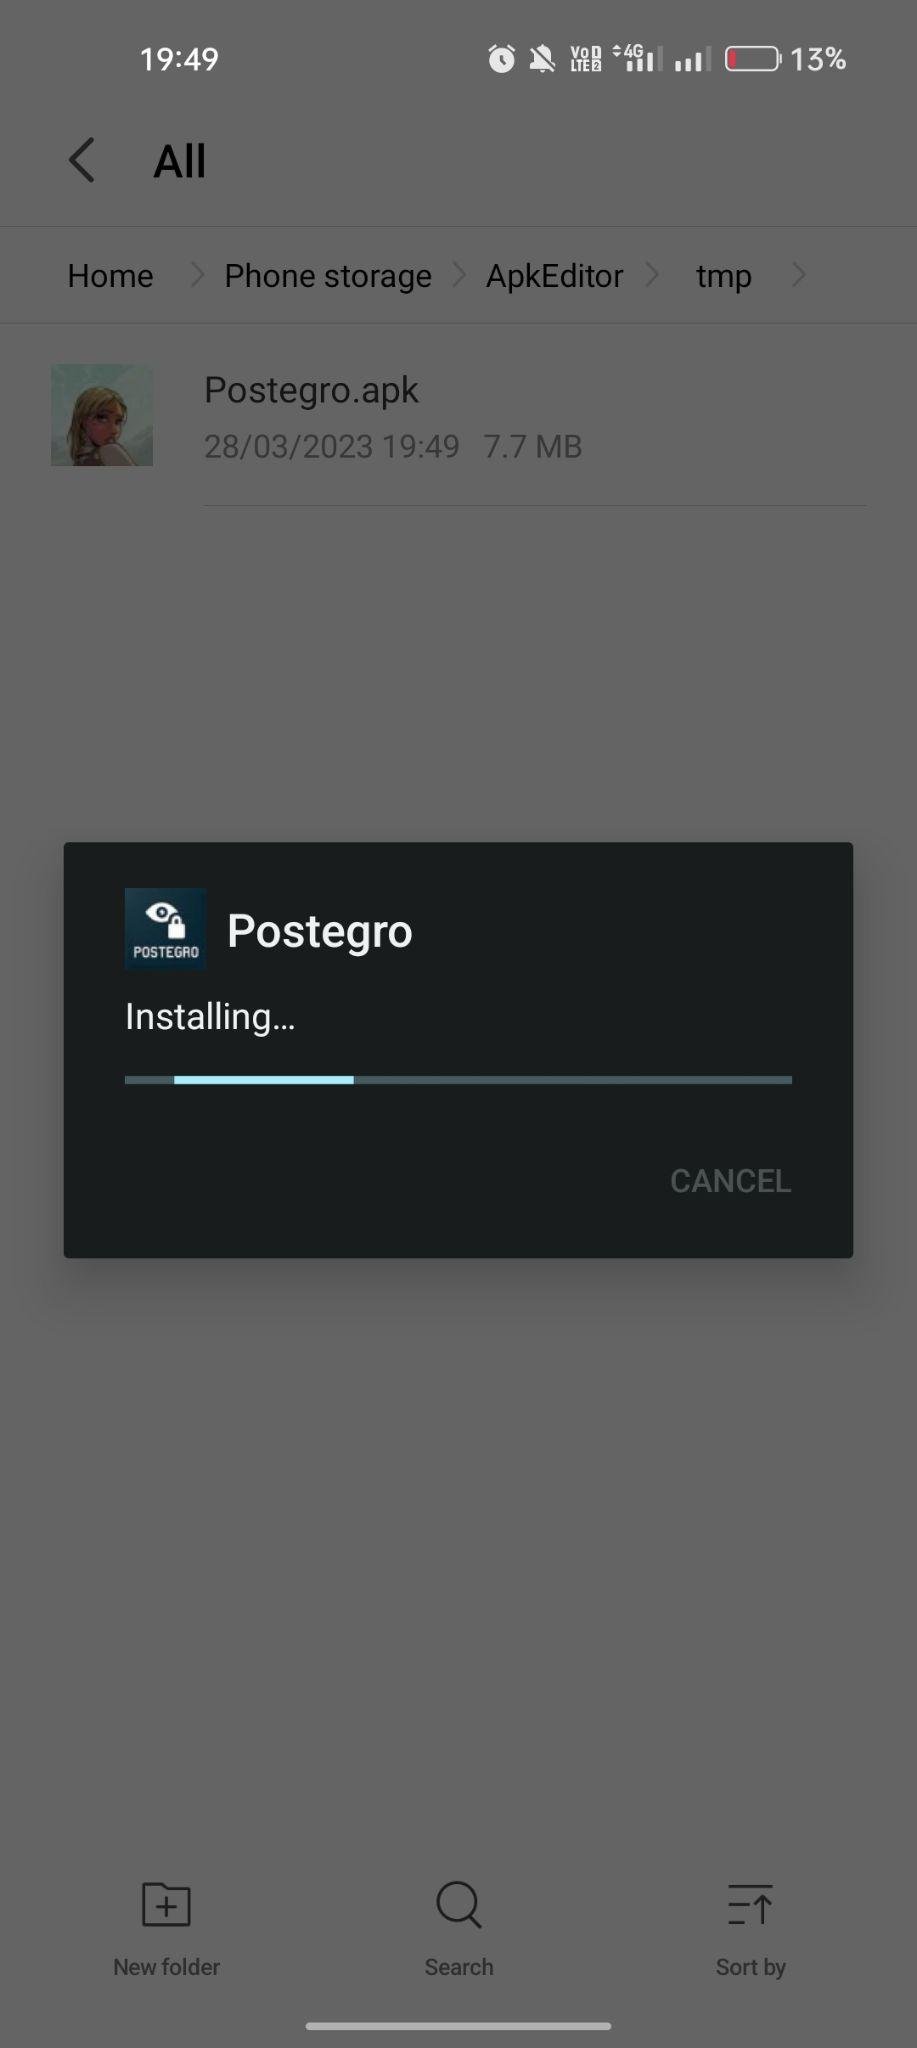 Postegro apk installing